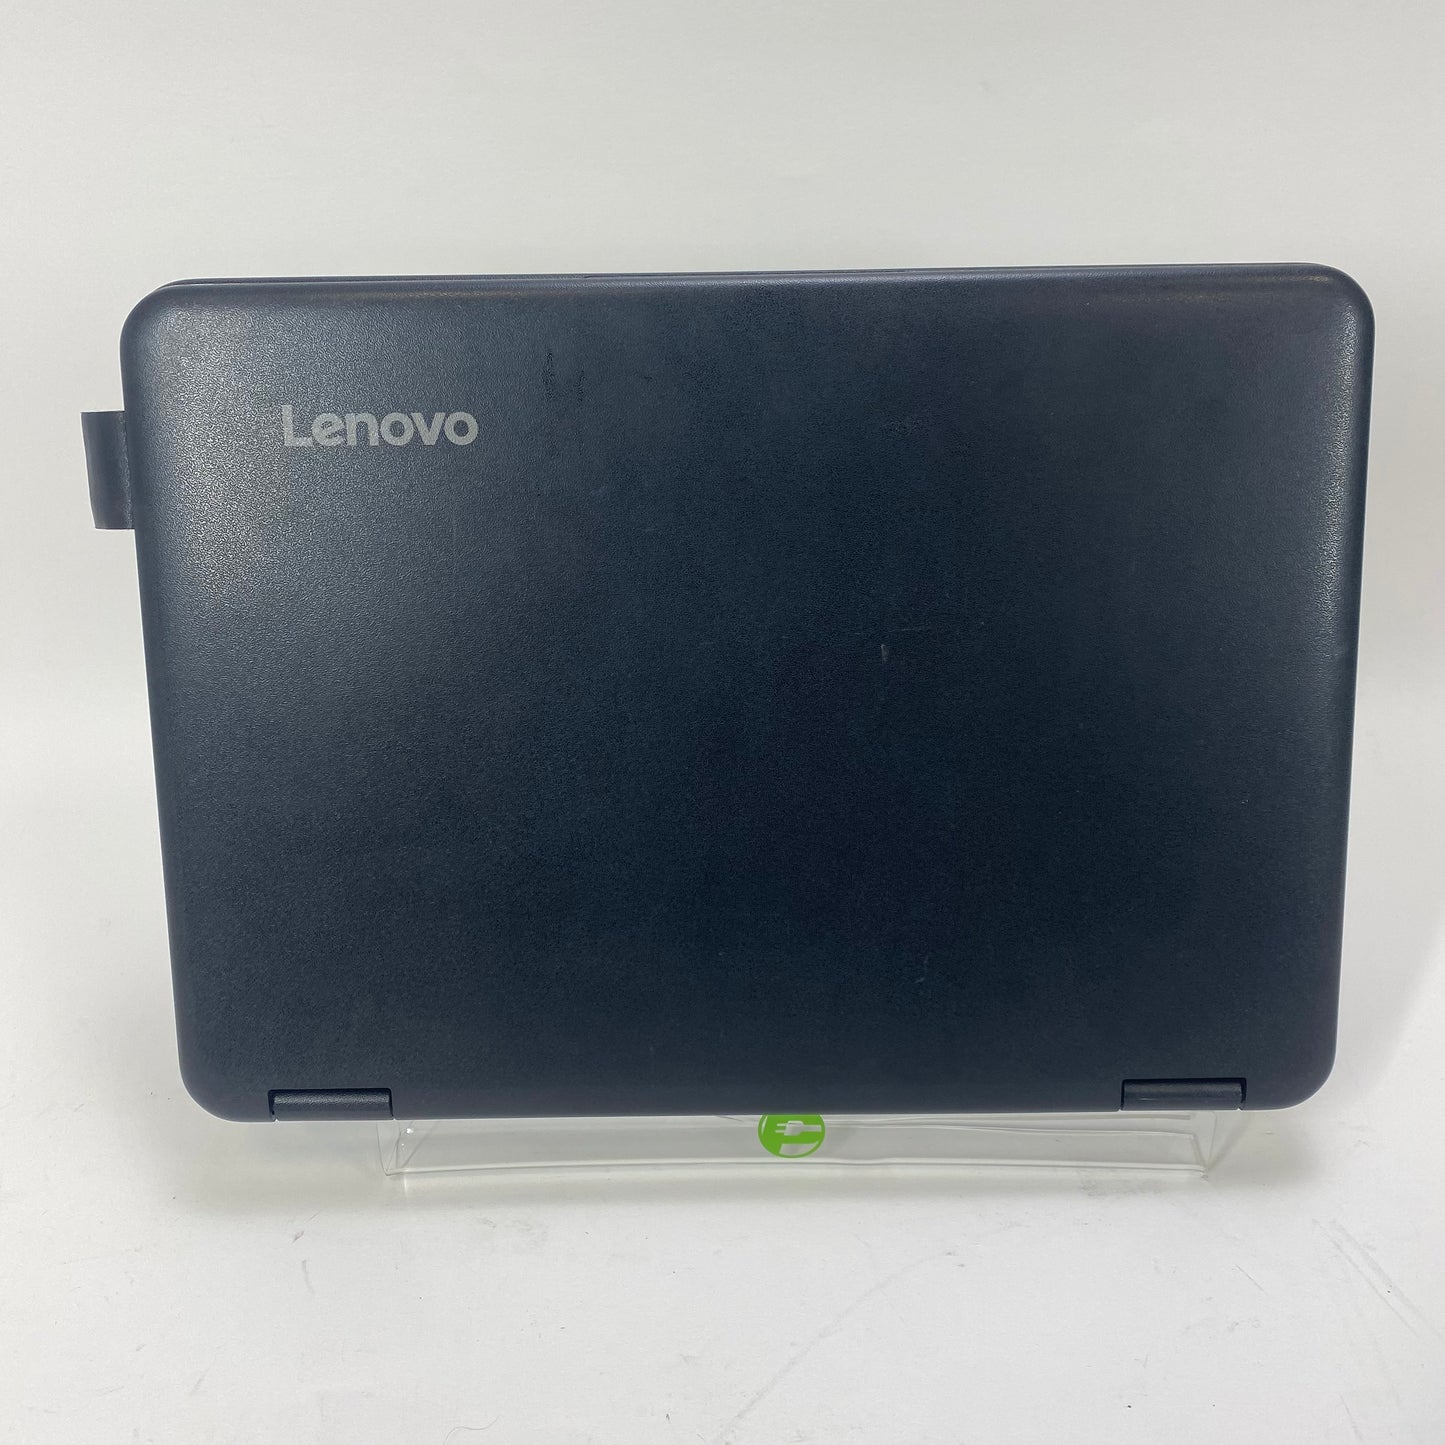 Lenovo 300e 81FY 11.6" Celeron N3450 1.1GHz 4GB RAM 64GB eMMc